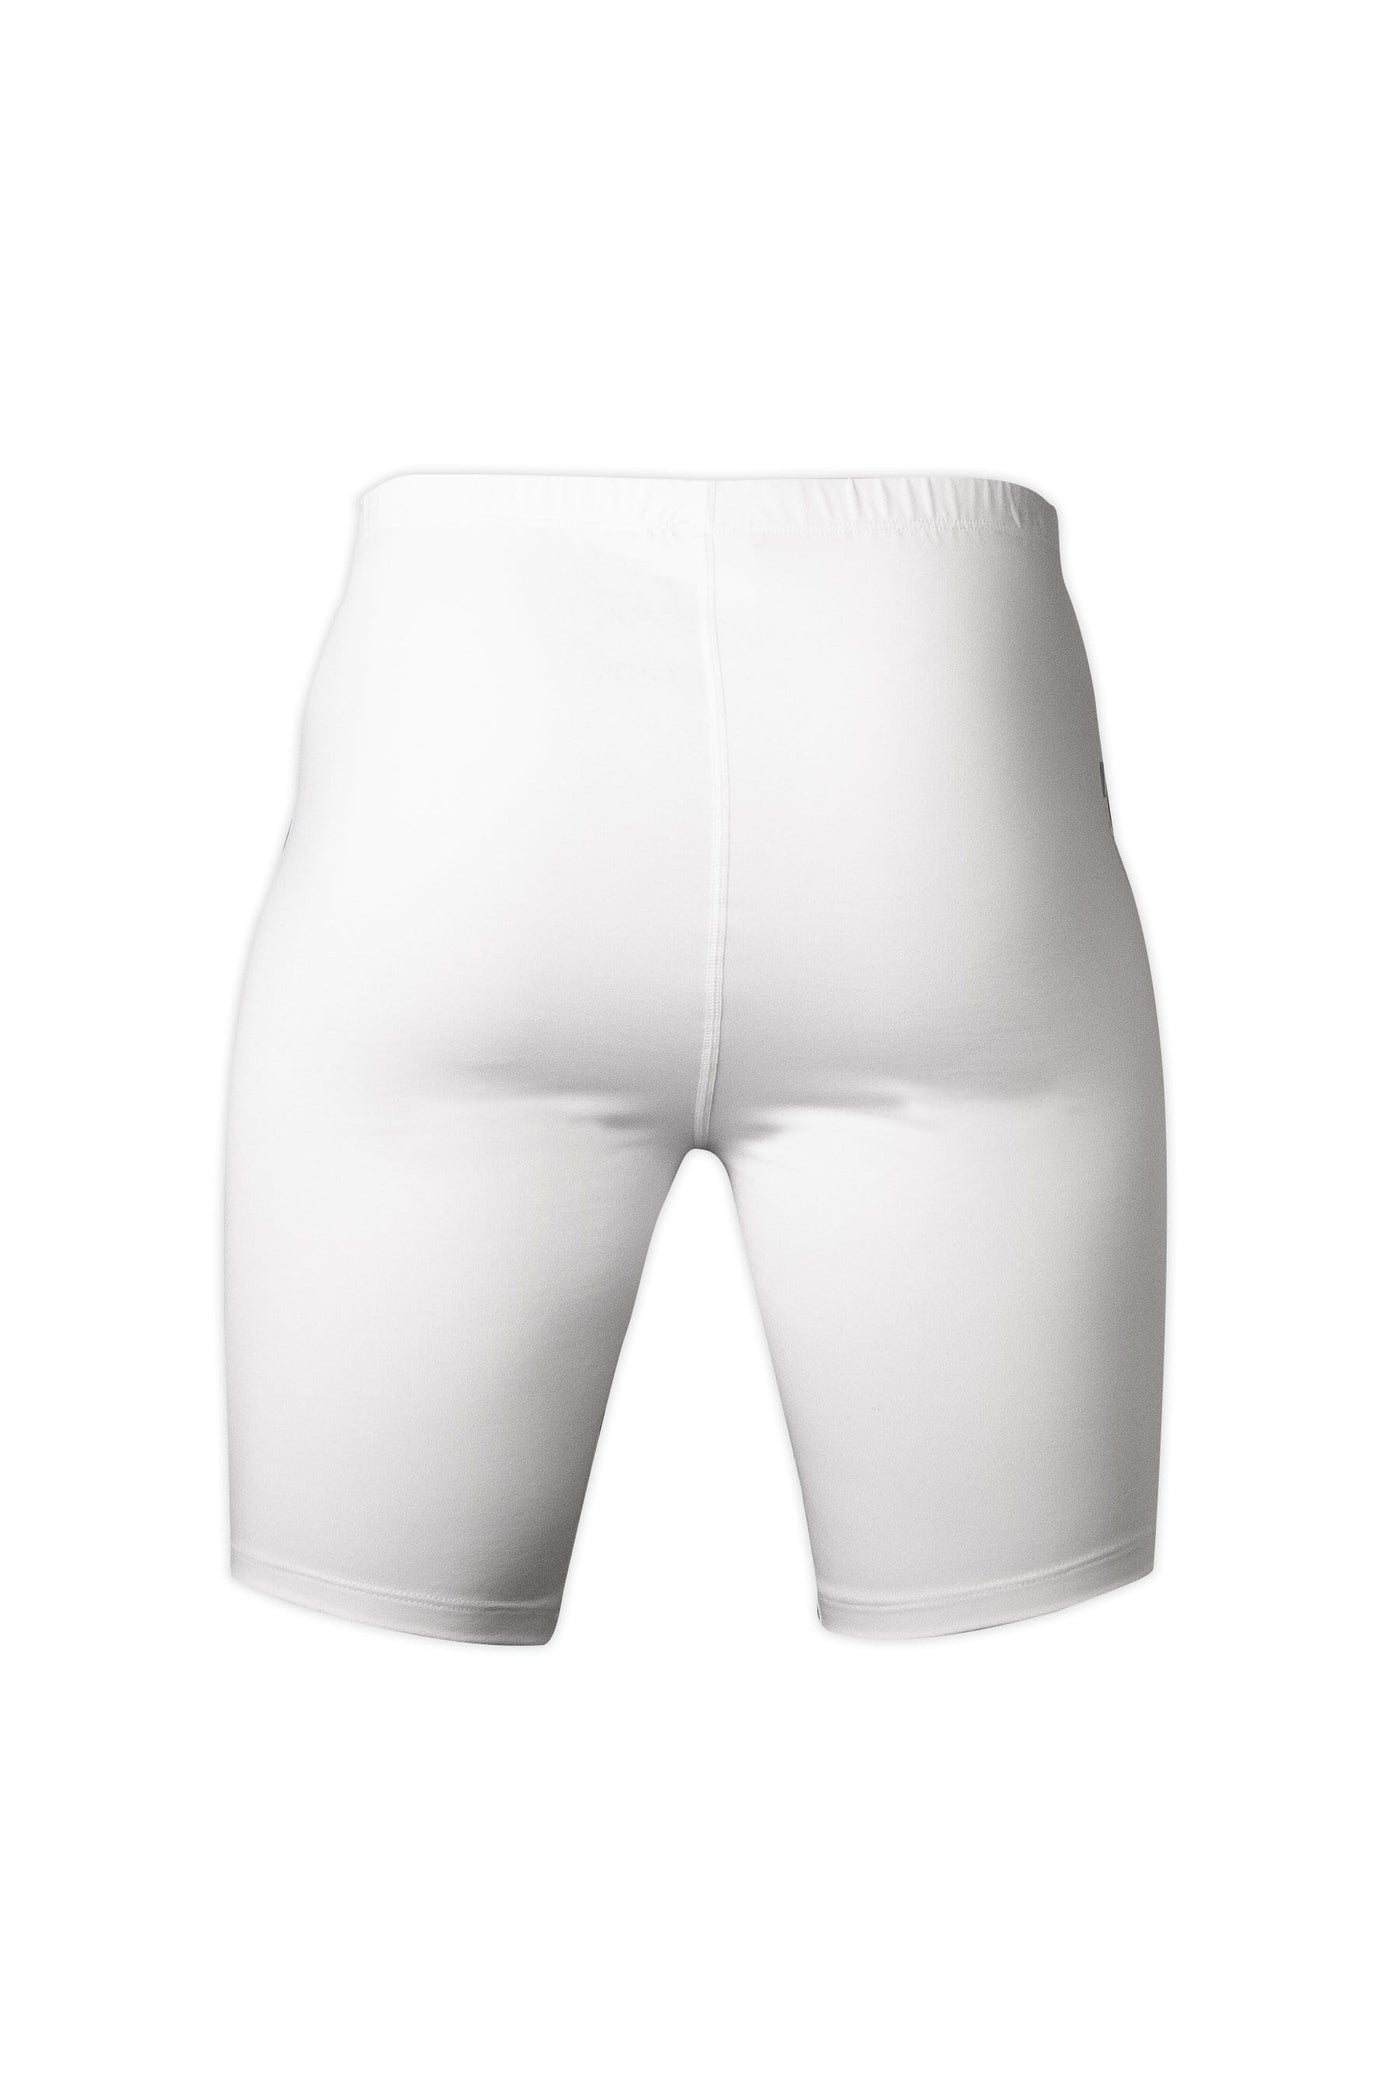 Men's Core Compression Shorts